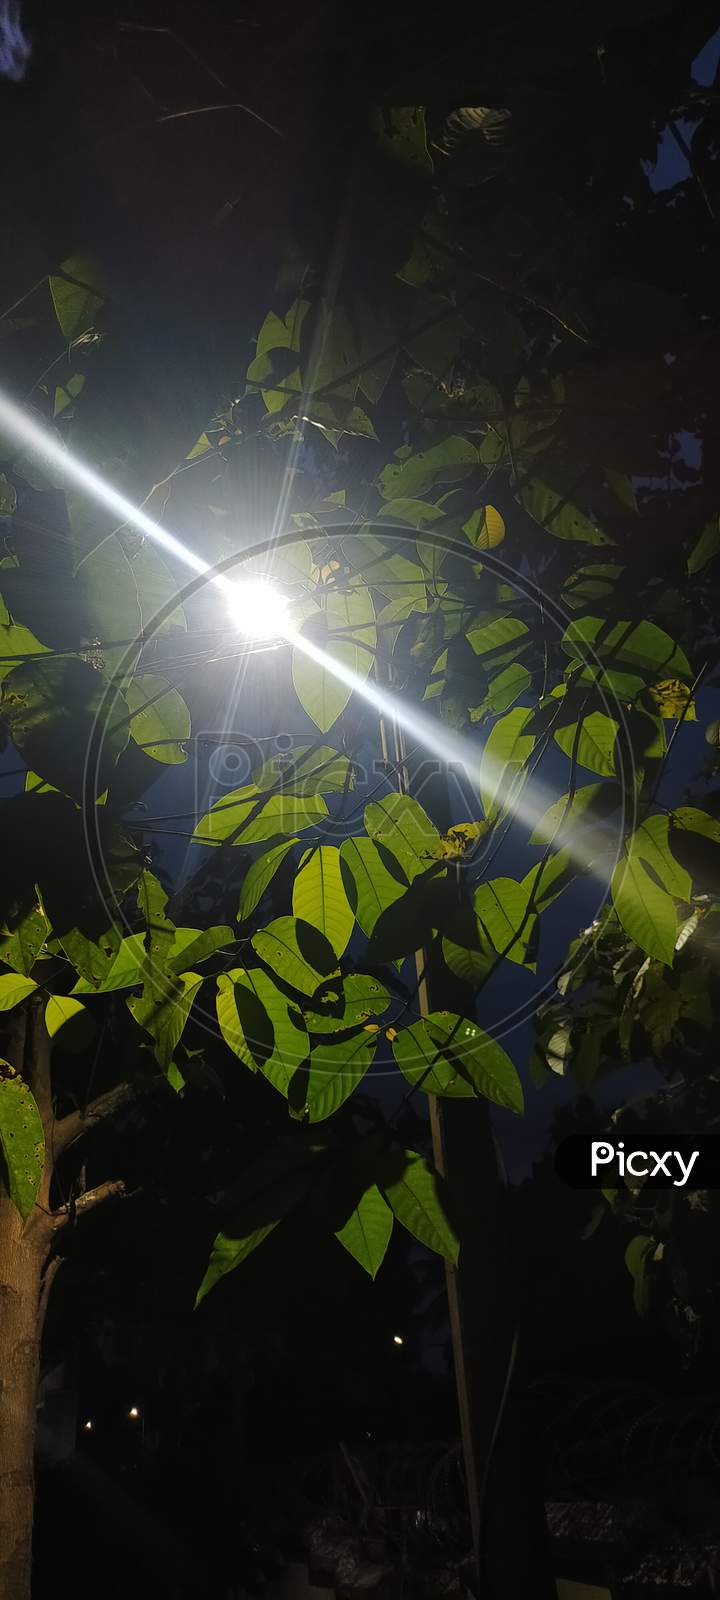 Light passing through tree